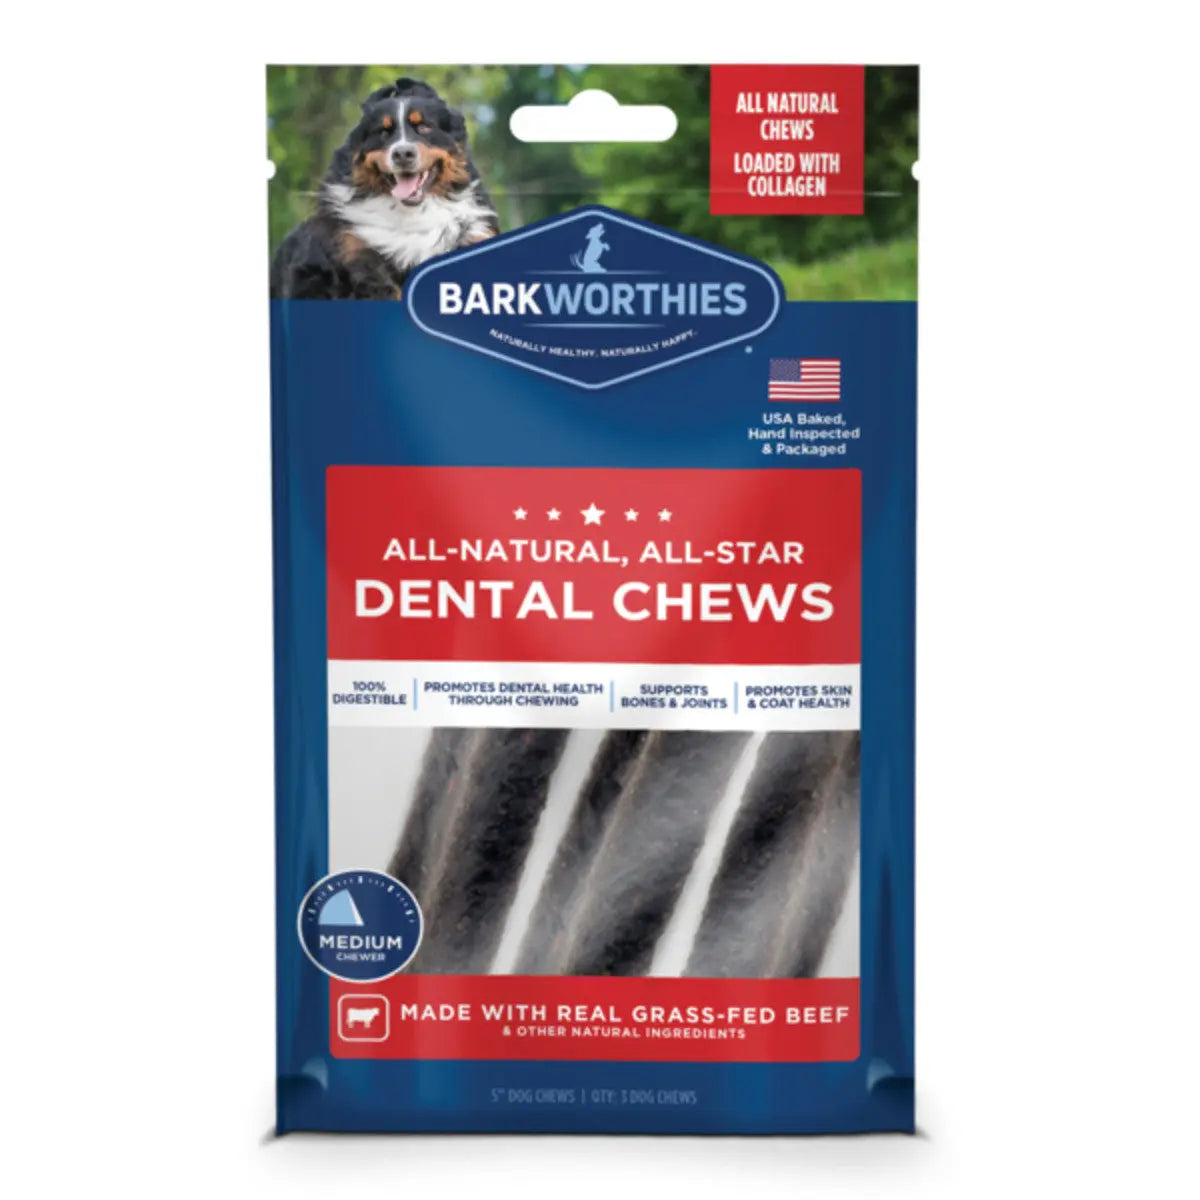 Barkworthies Dental Collagen Natural Dog Chews for Puppy Teething Barkworthies